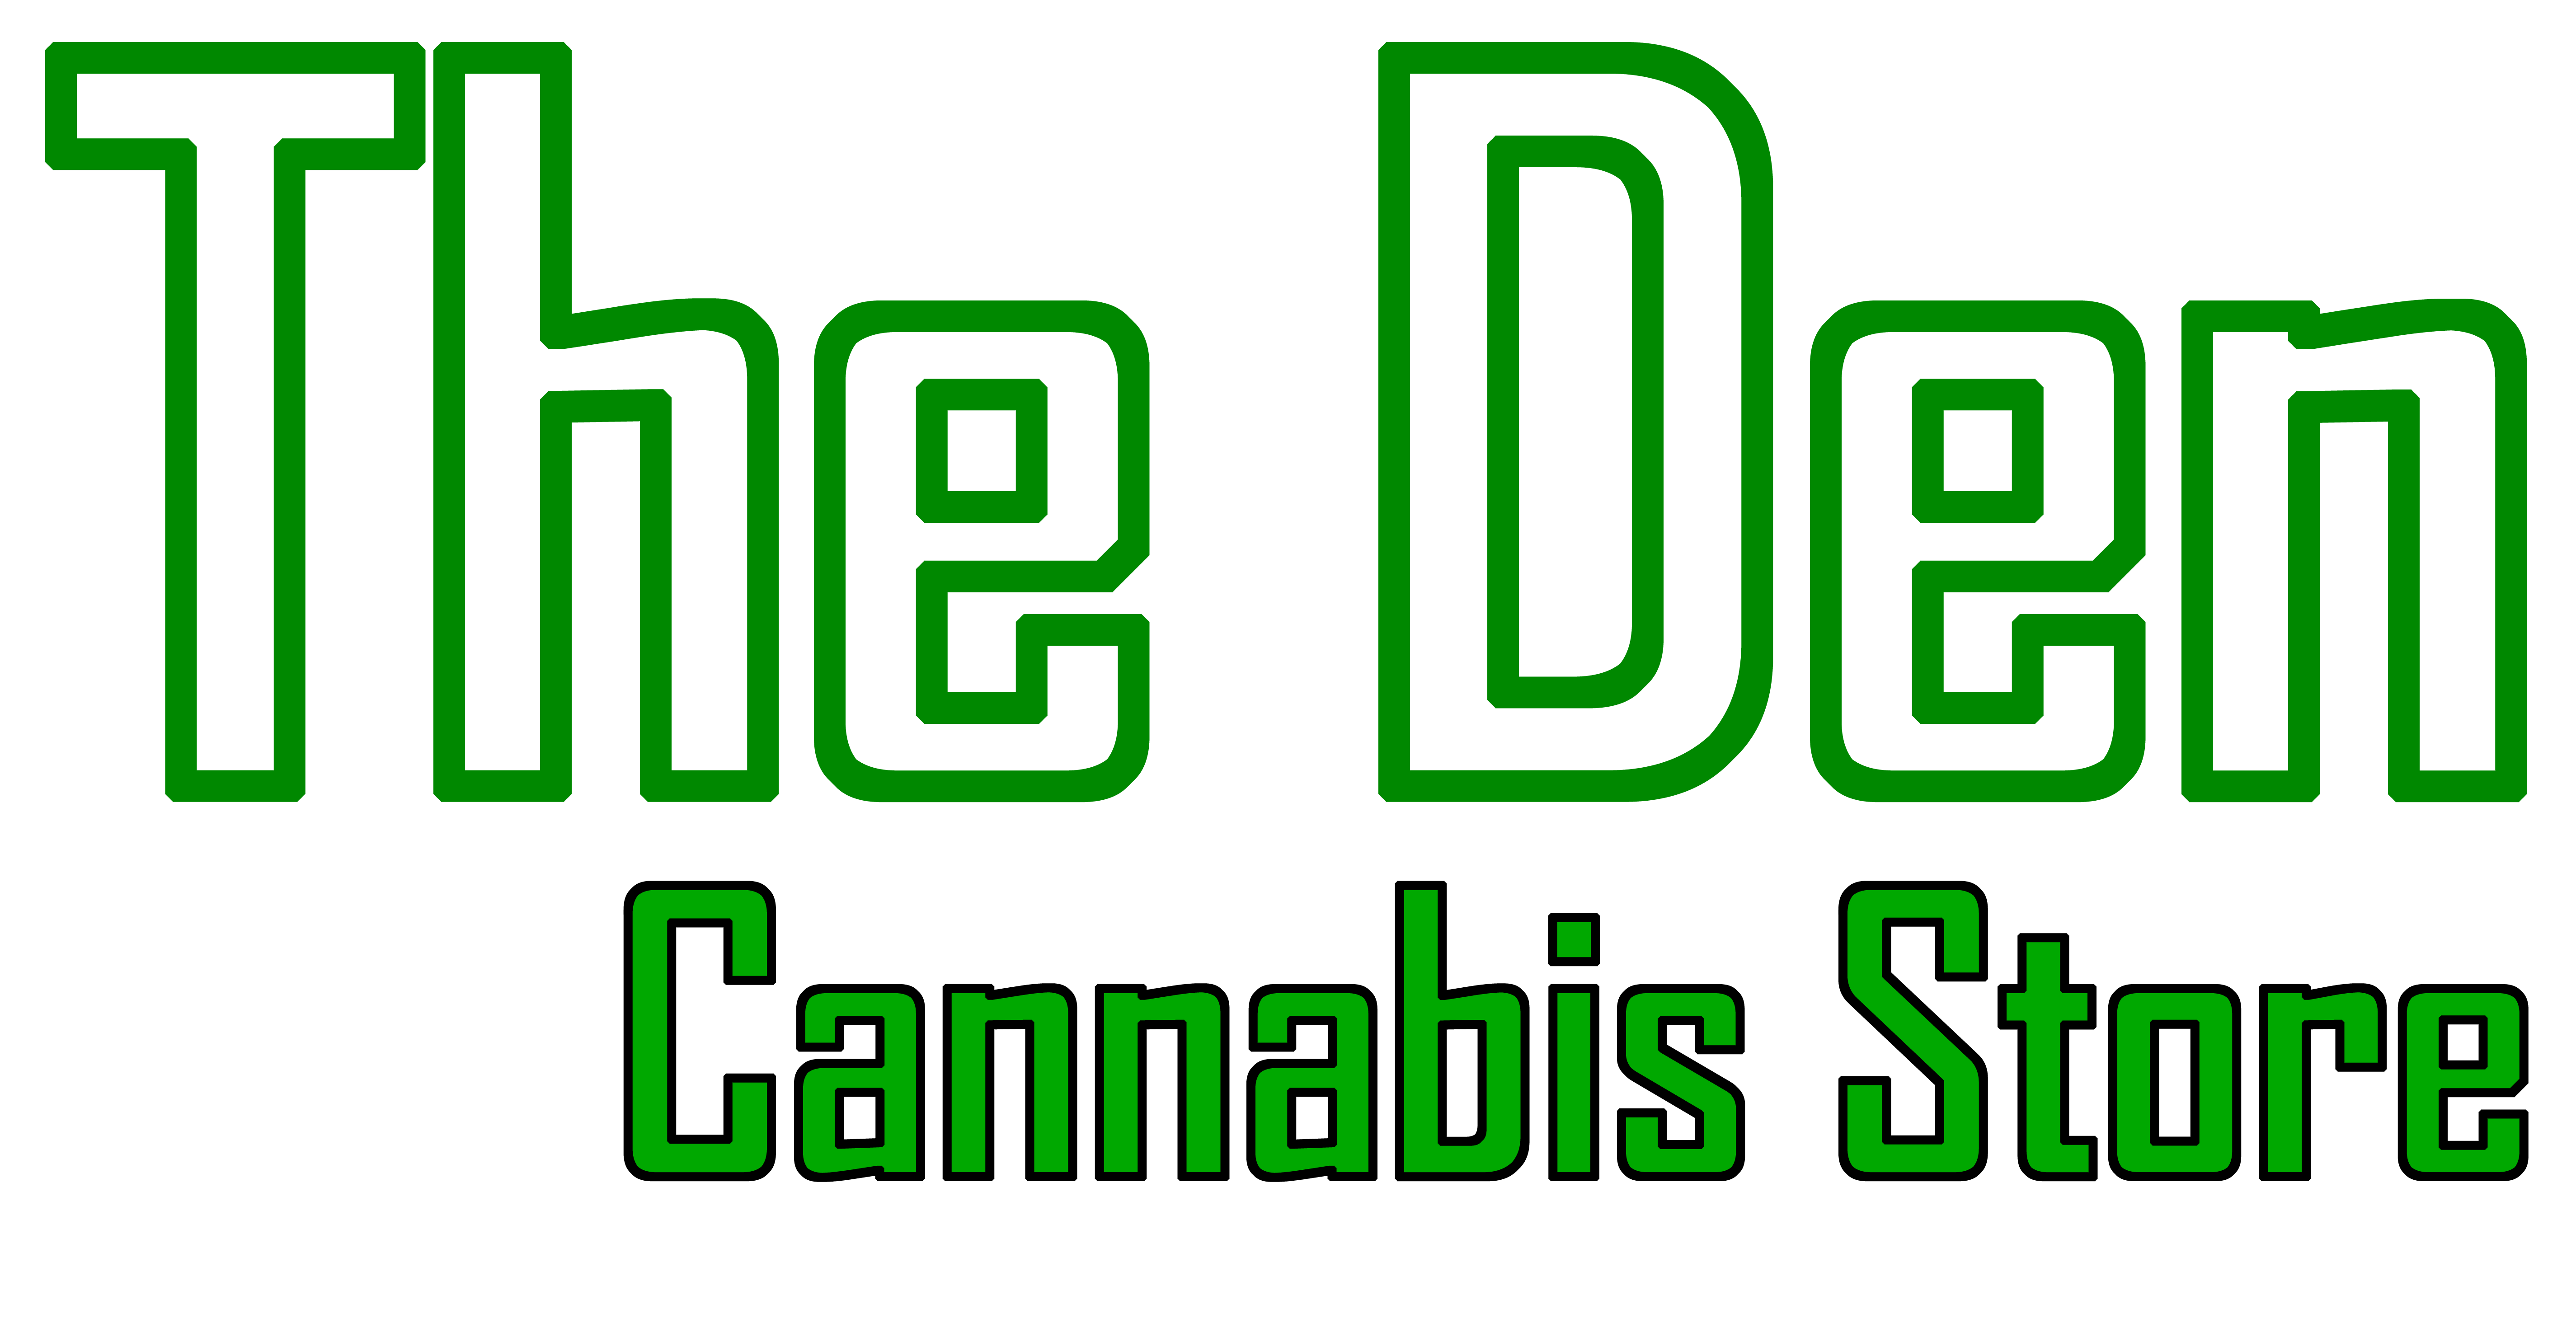 The Den Cannabis Store